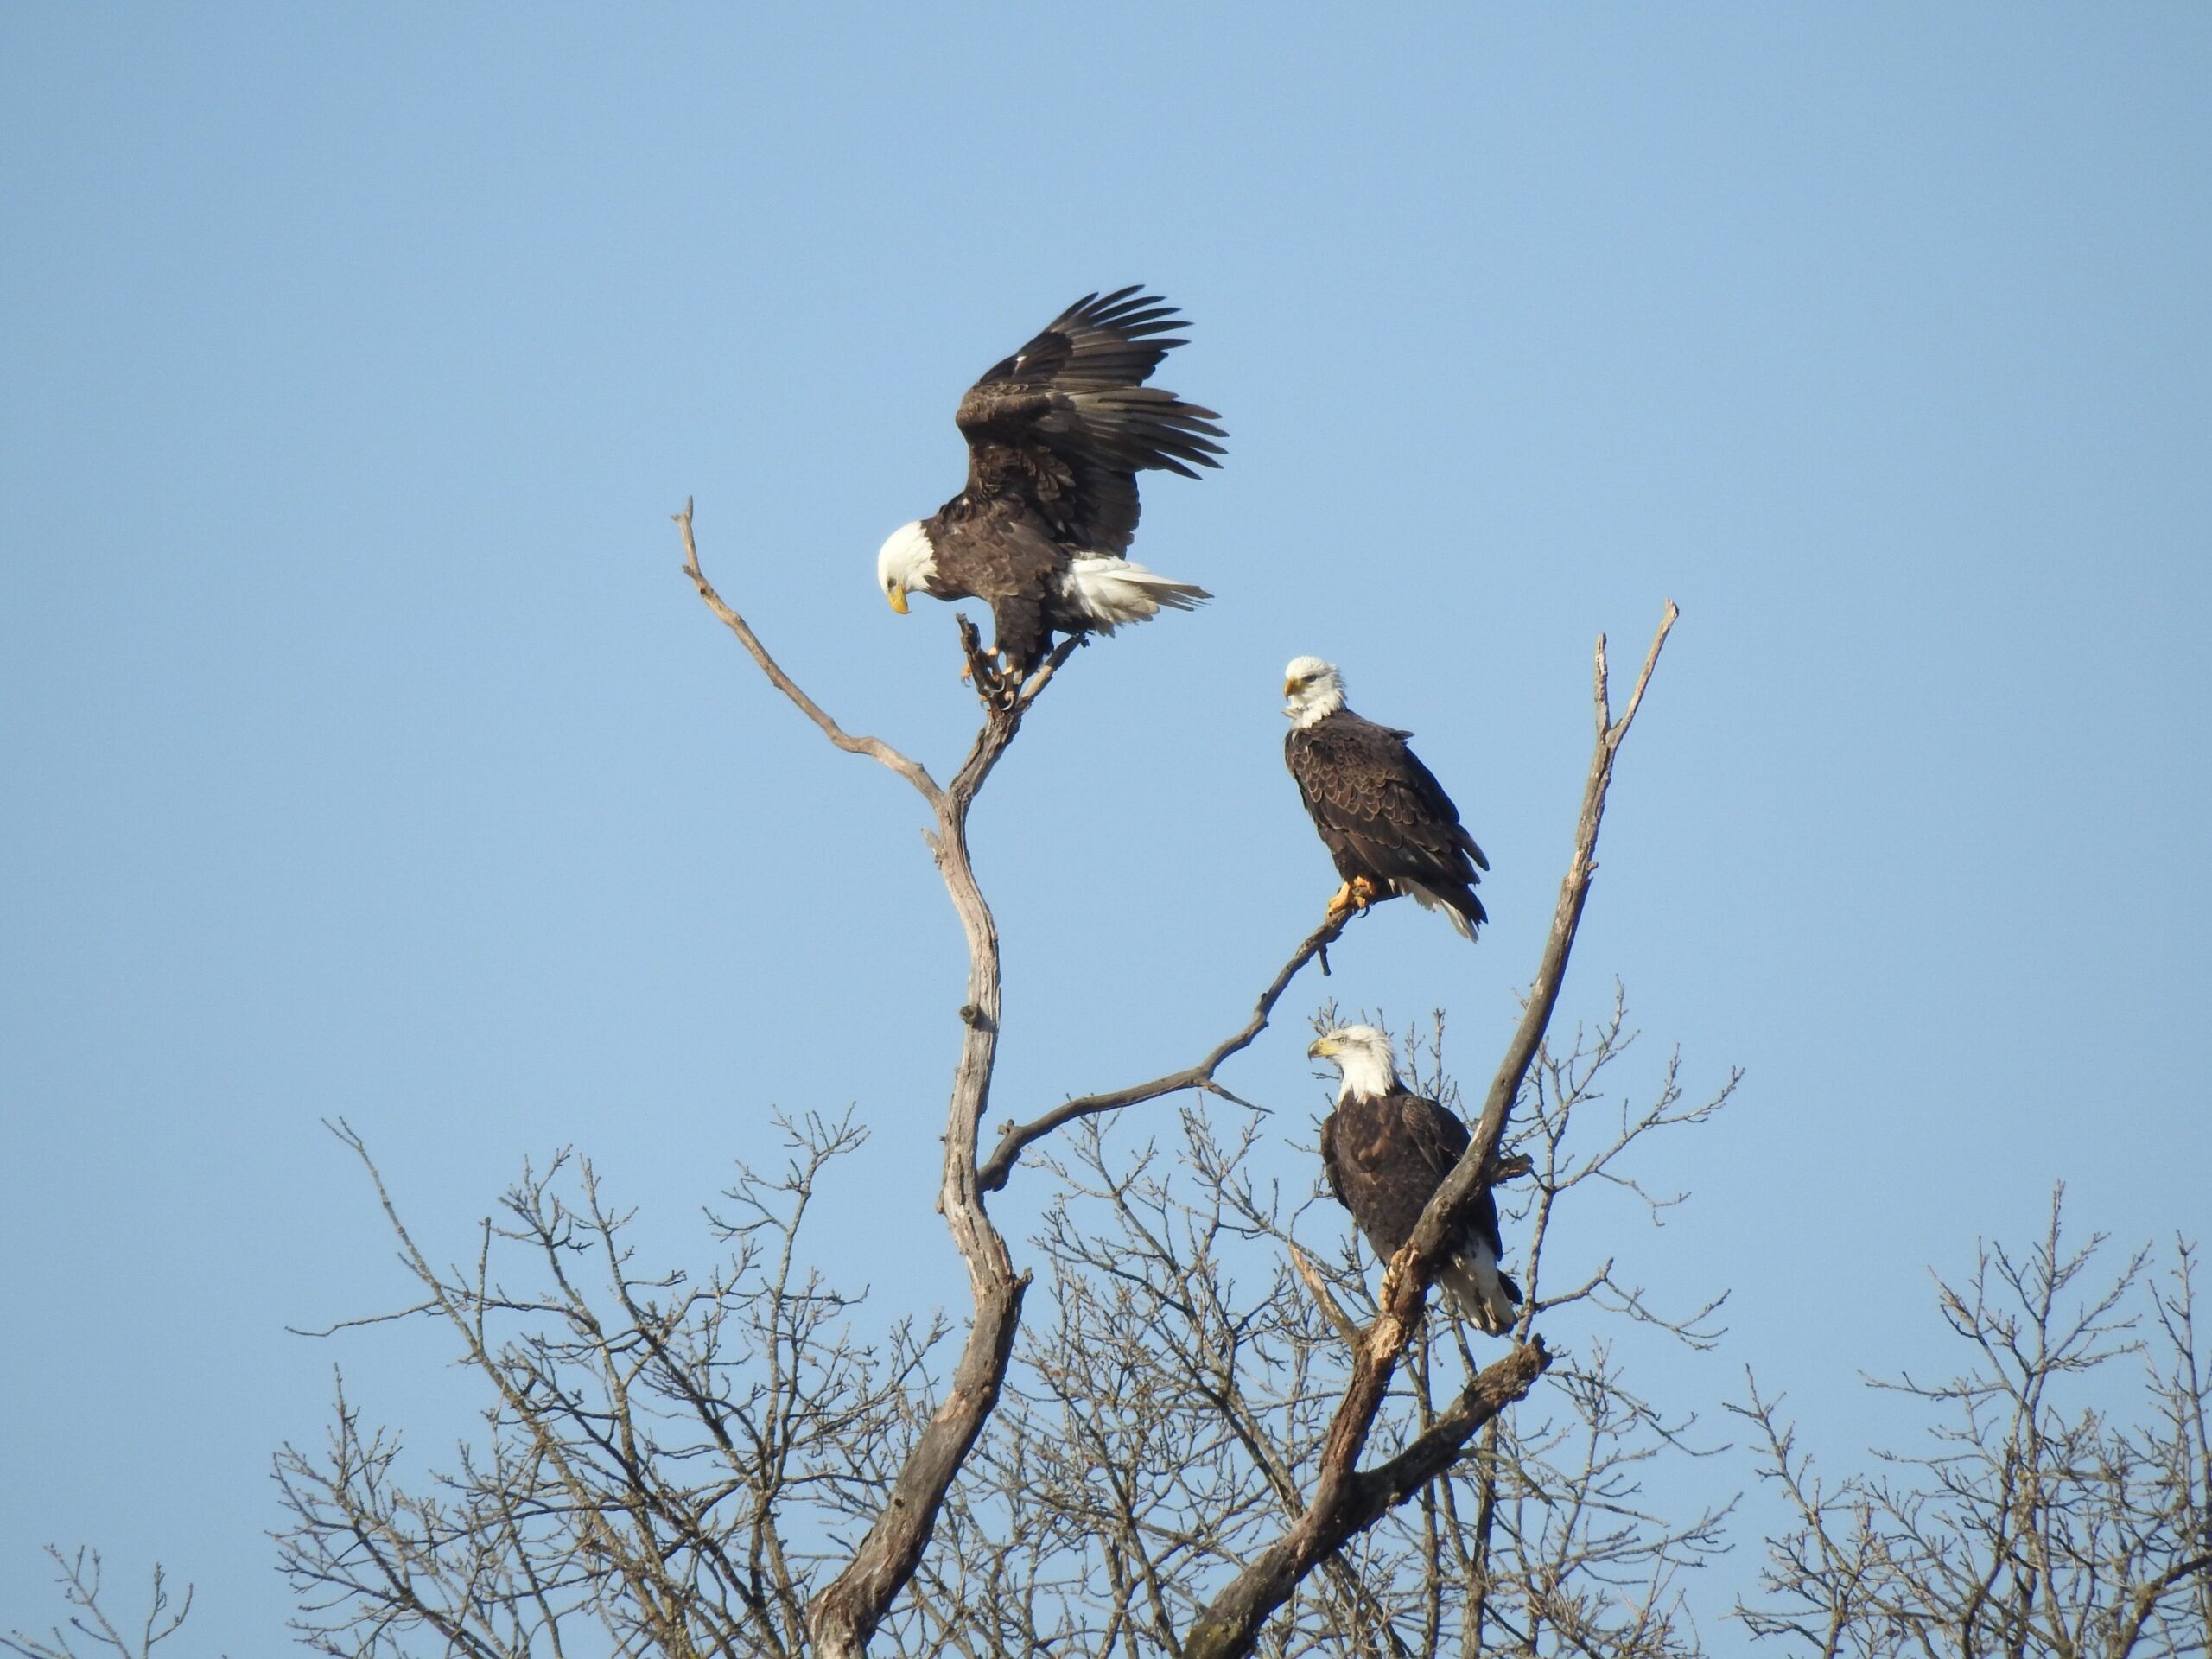 Bald eagles sitting in tree near Sauk Prairie.